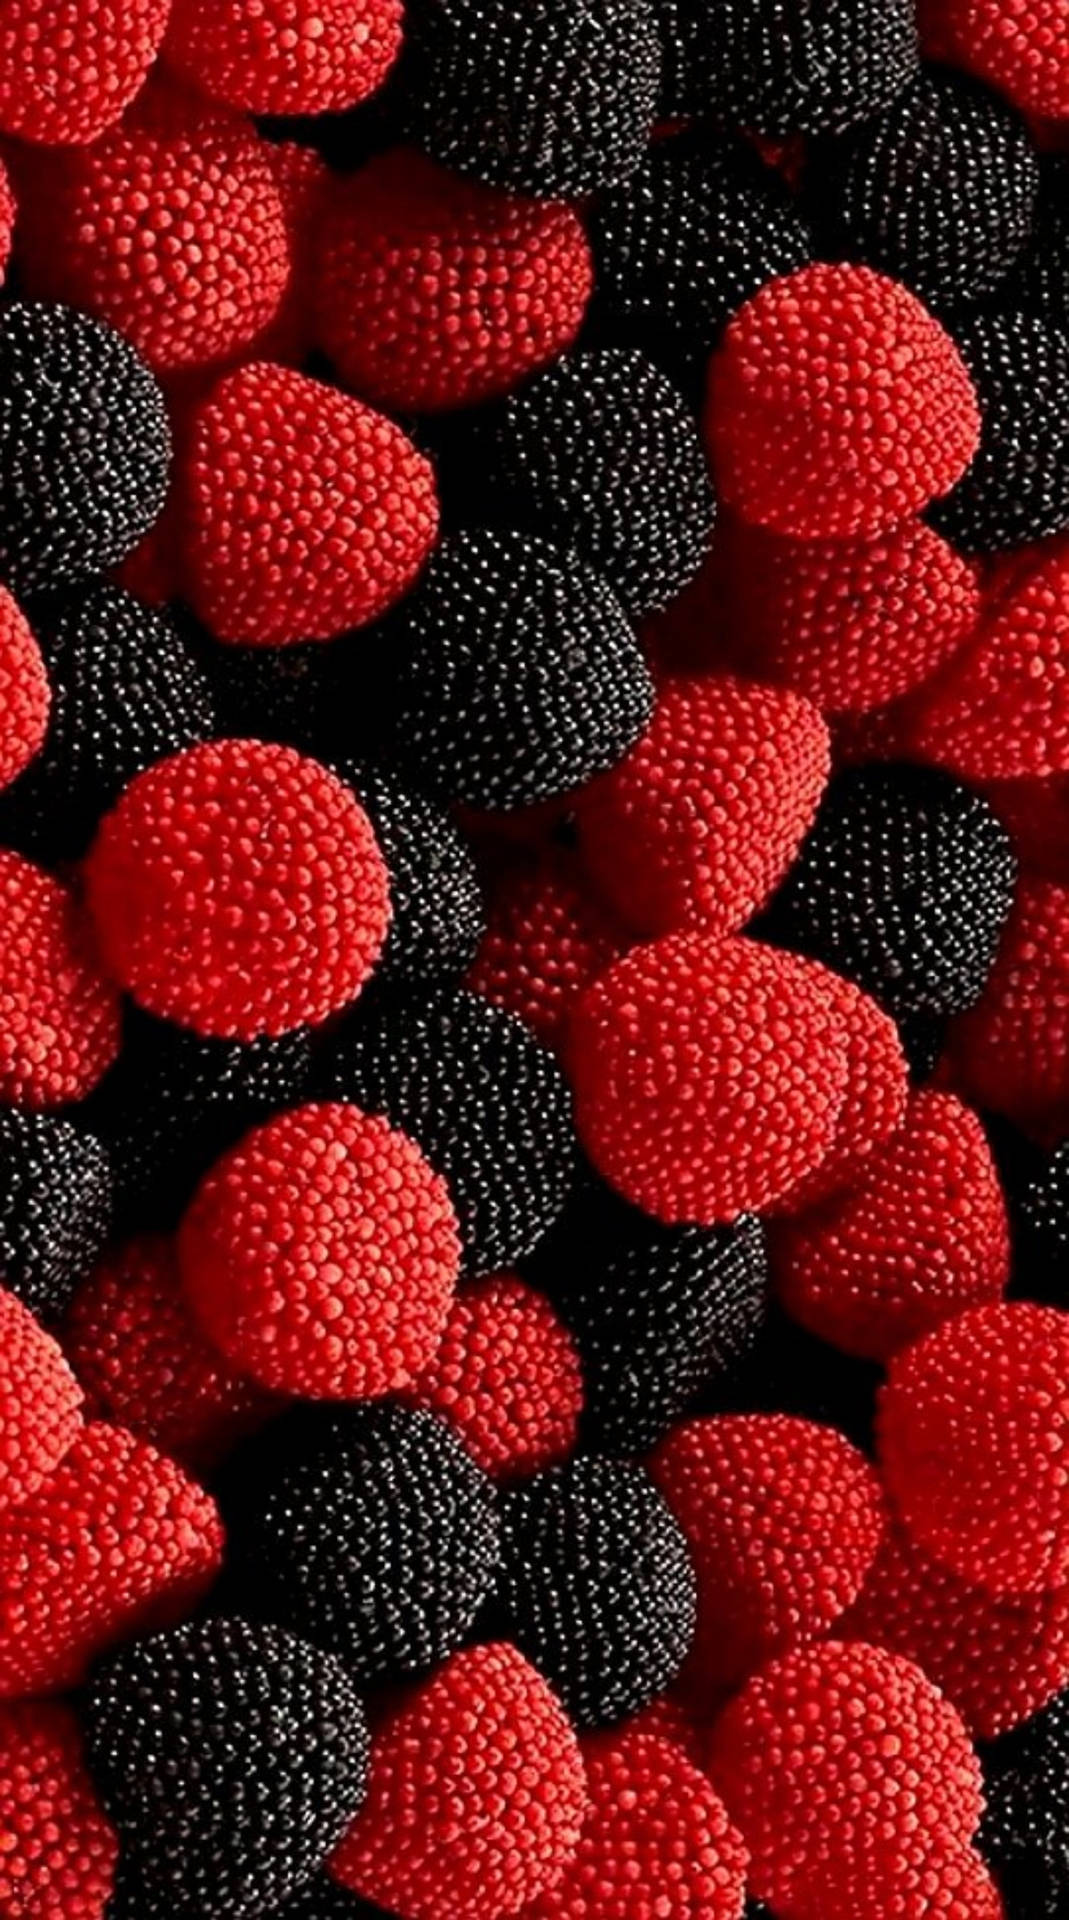 Raspberry Fruits 8k Phone Background